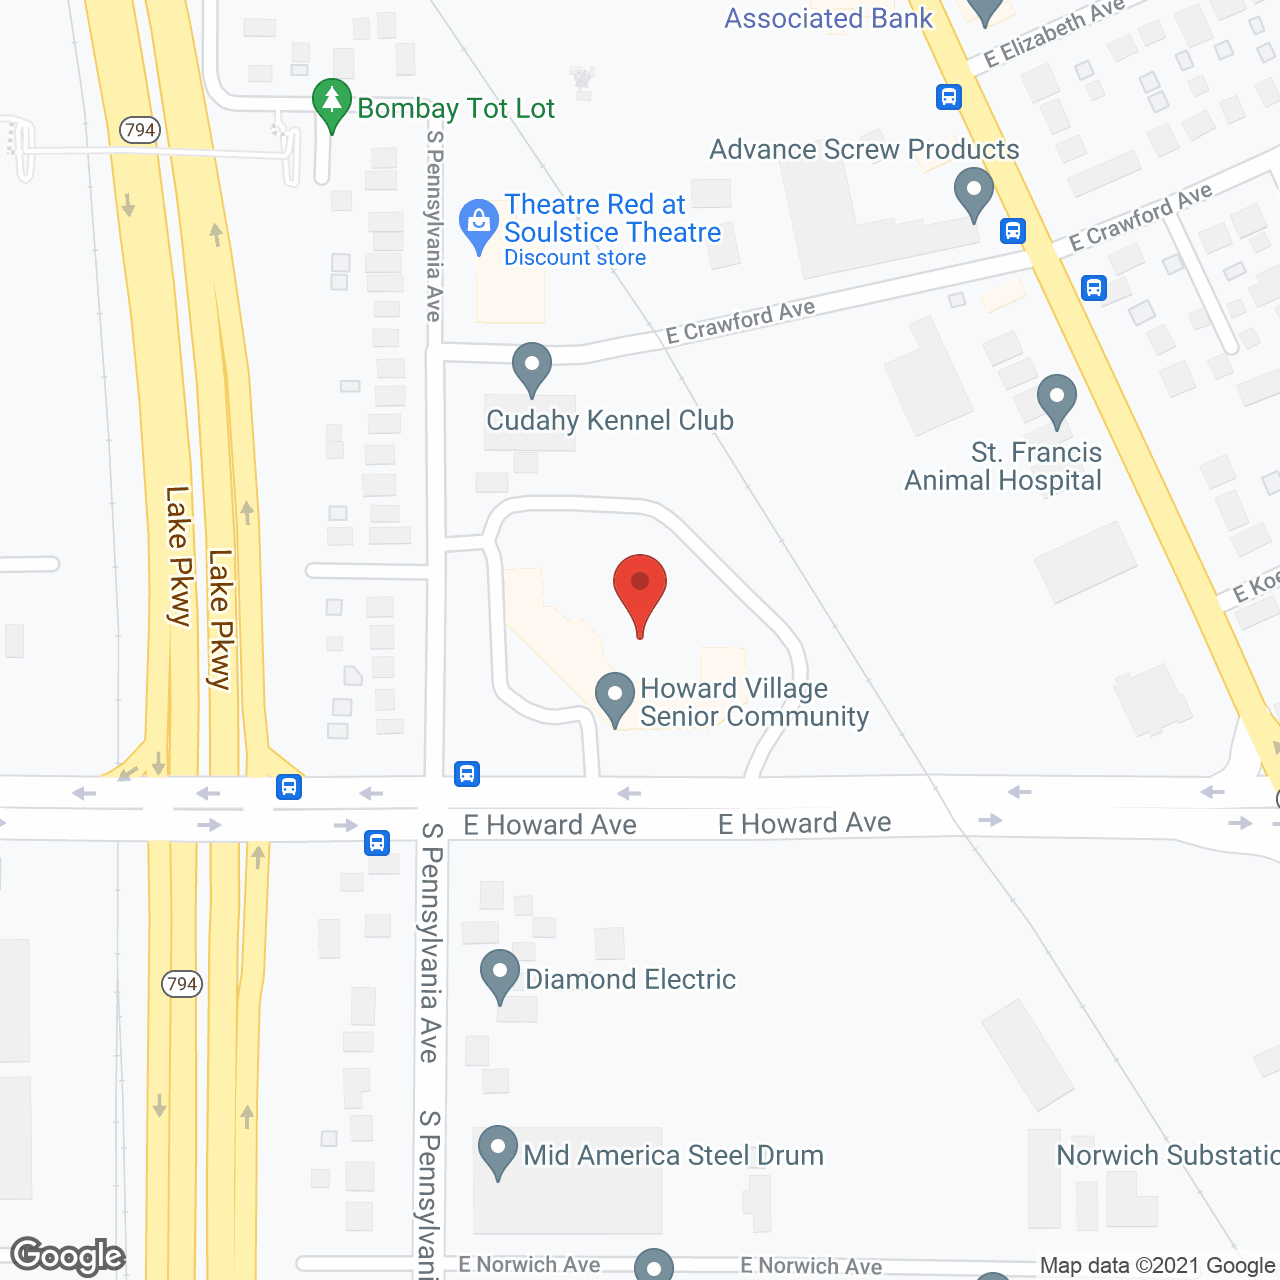 Howard Village in google map